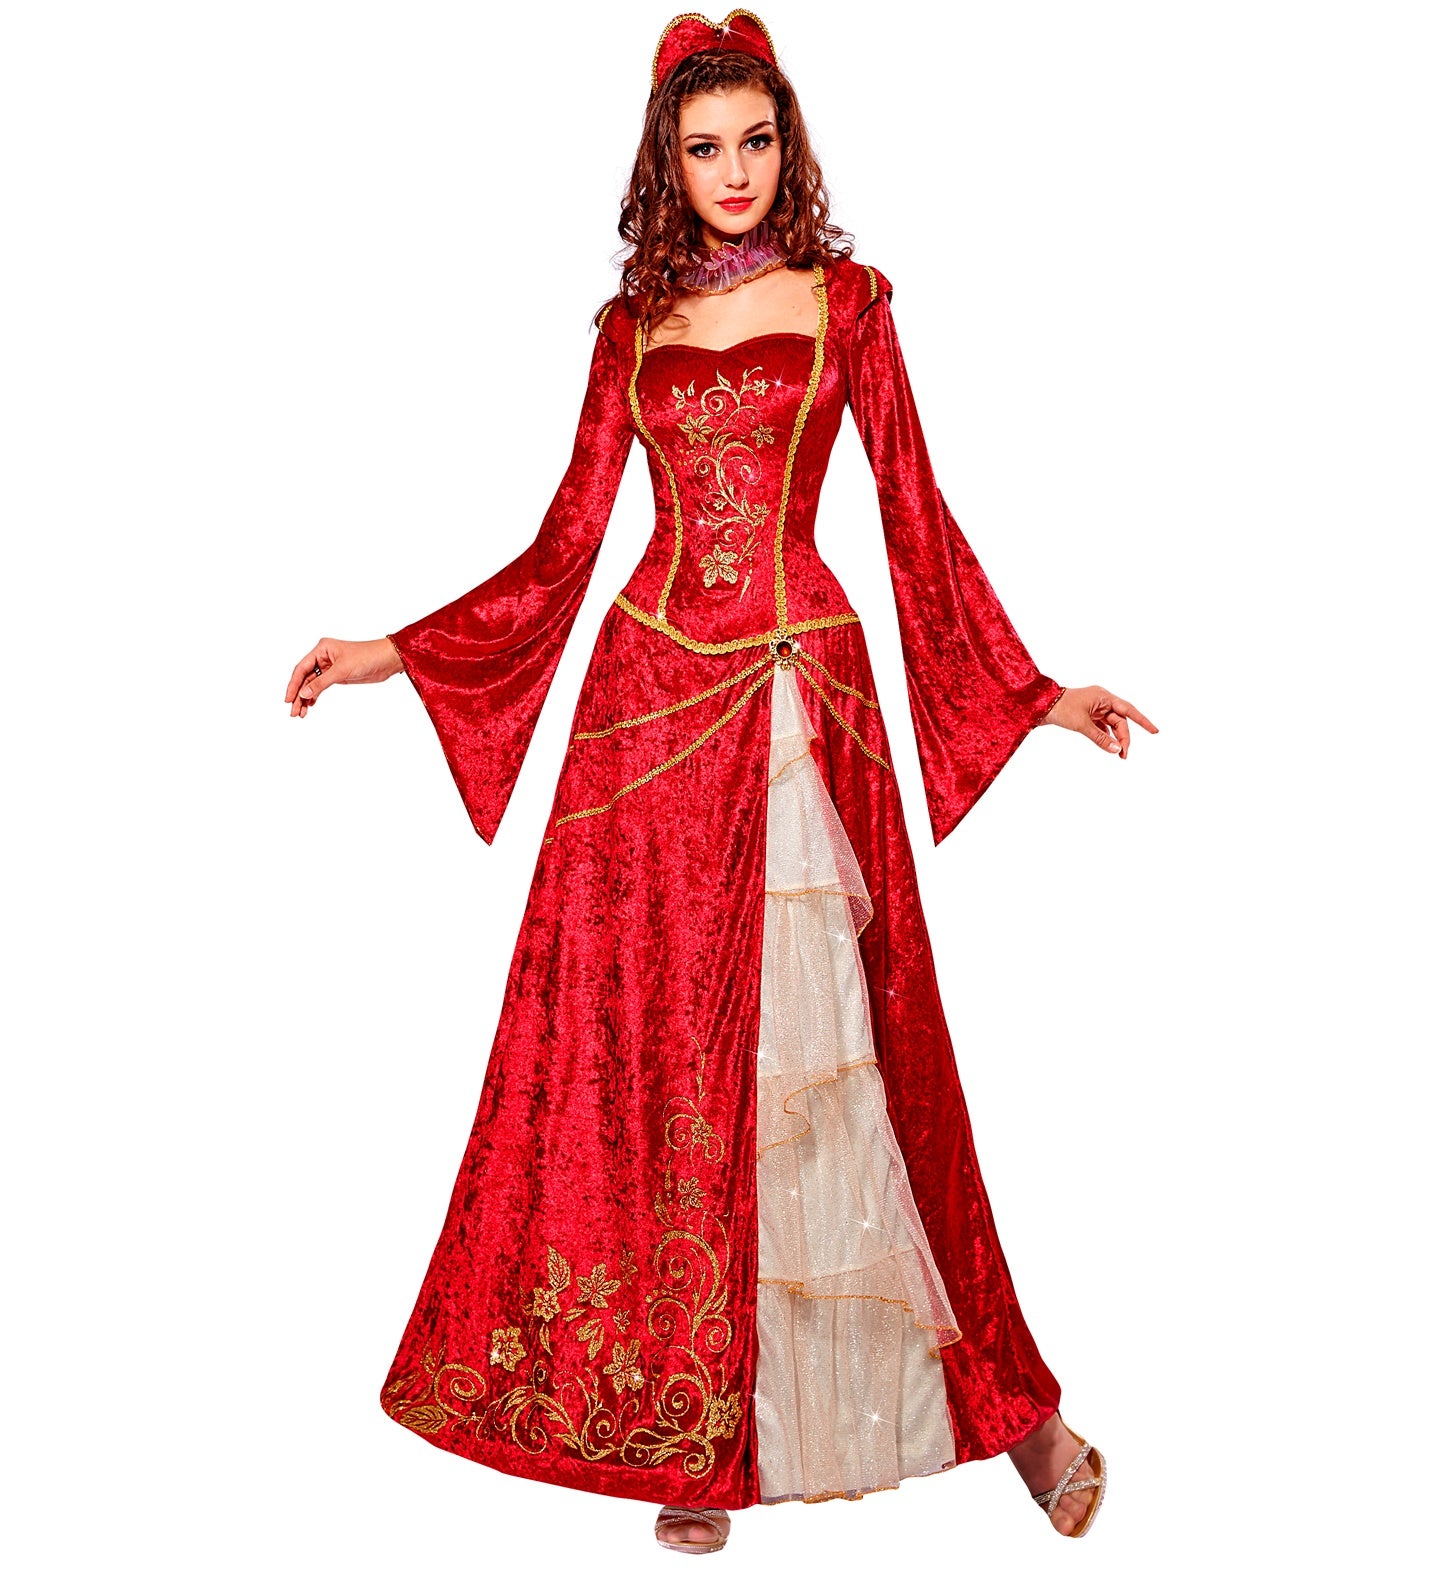 Red Renaissance Princess Costume